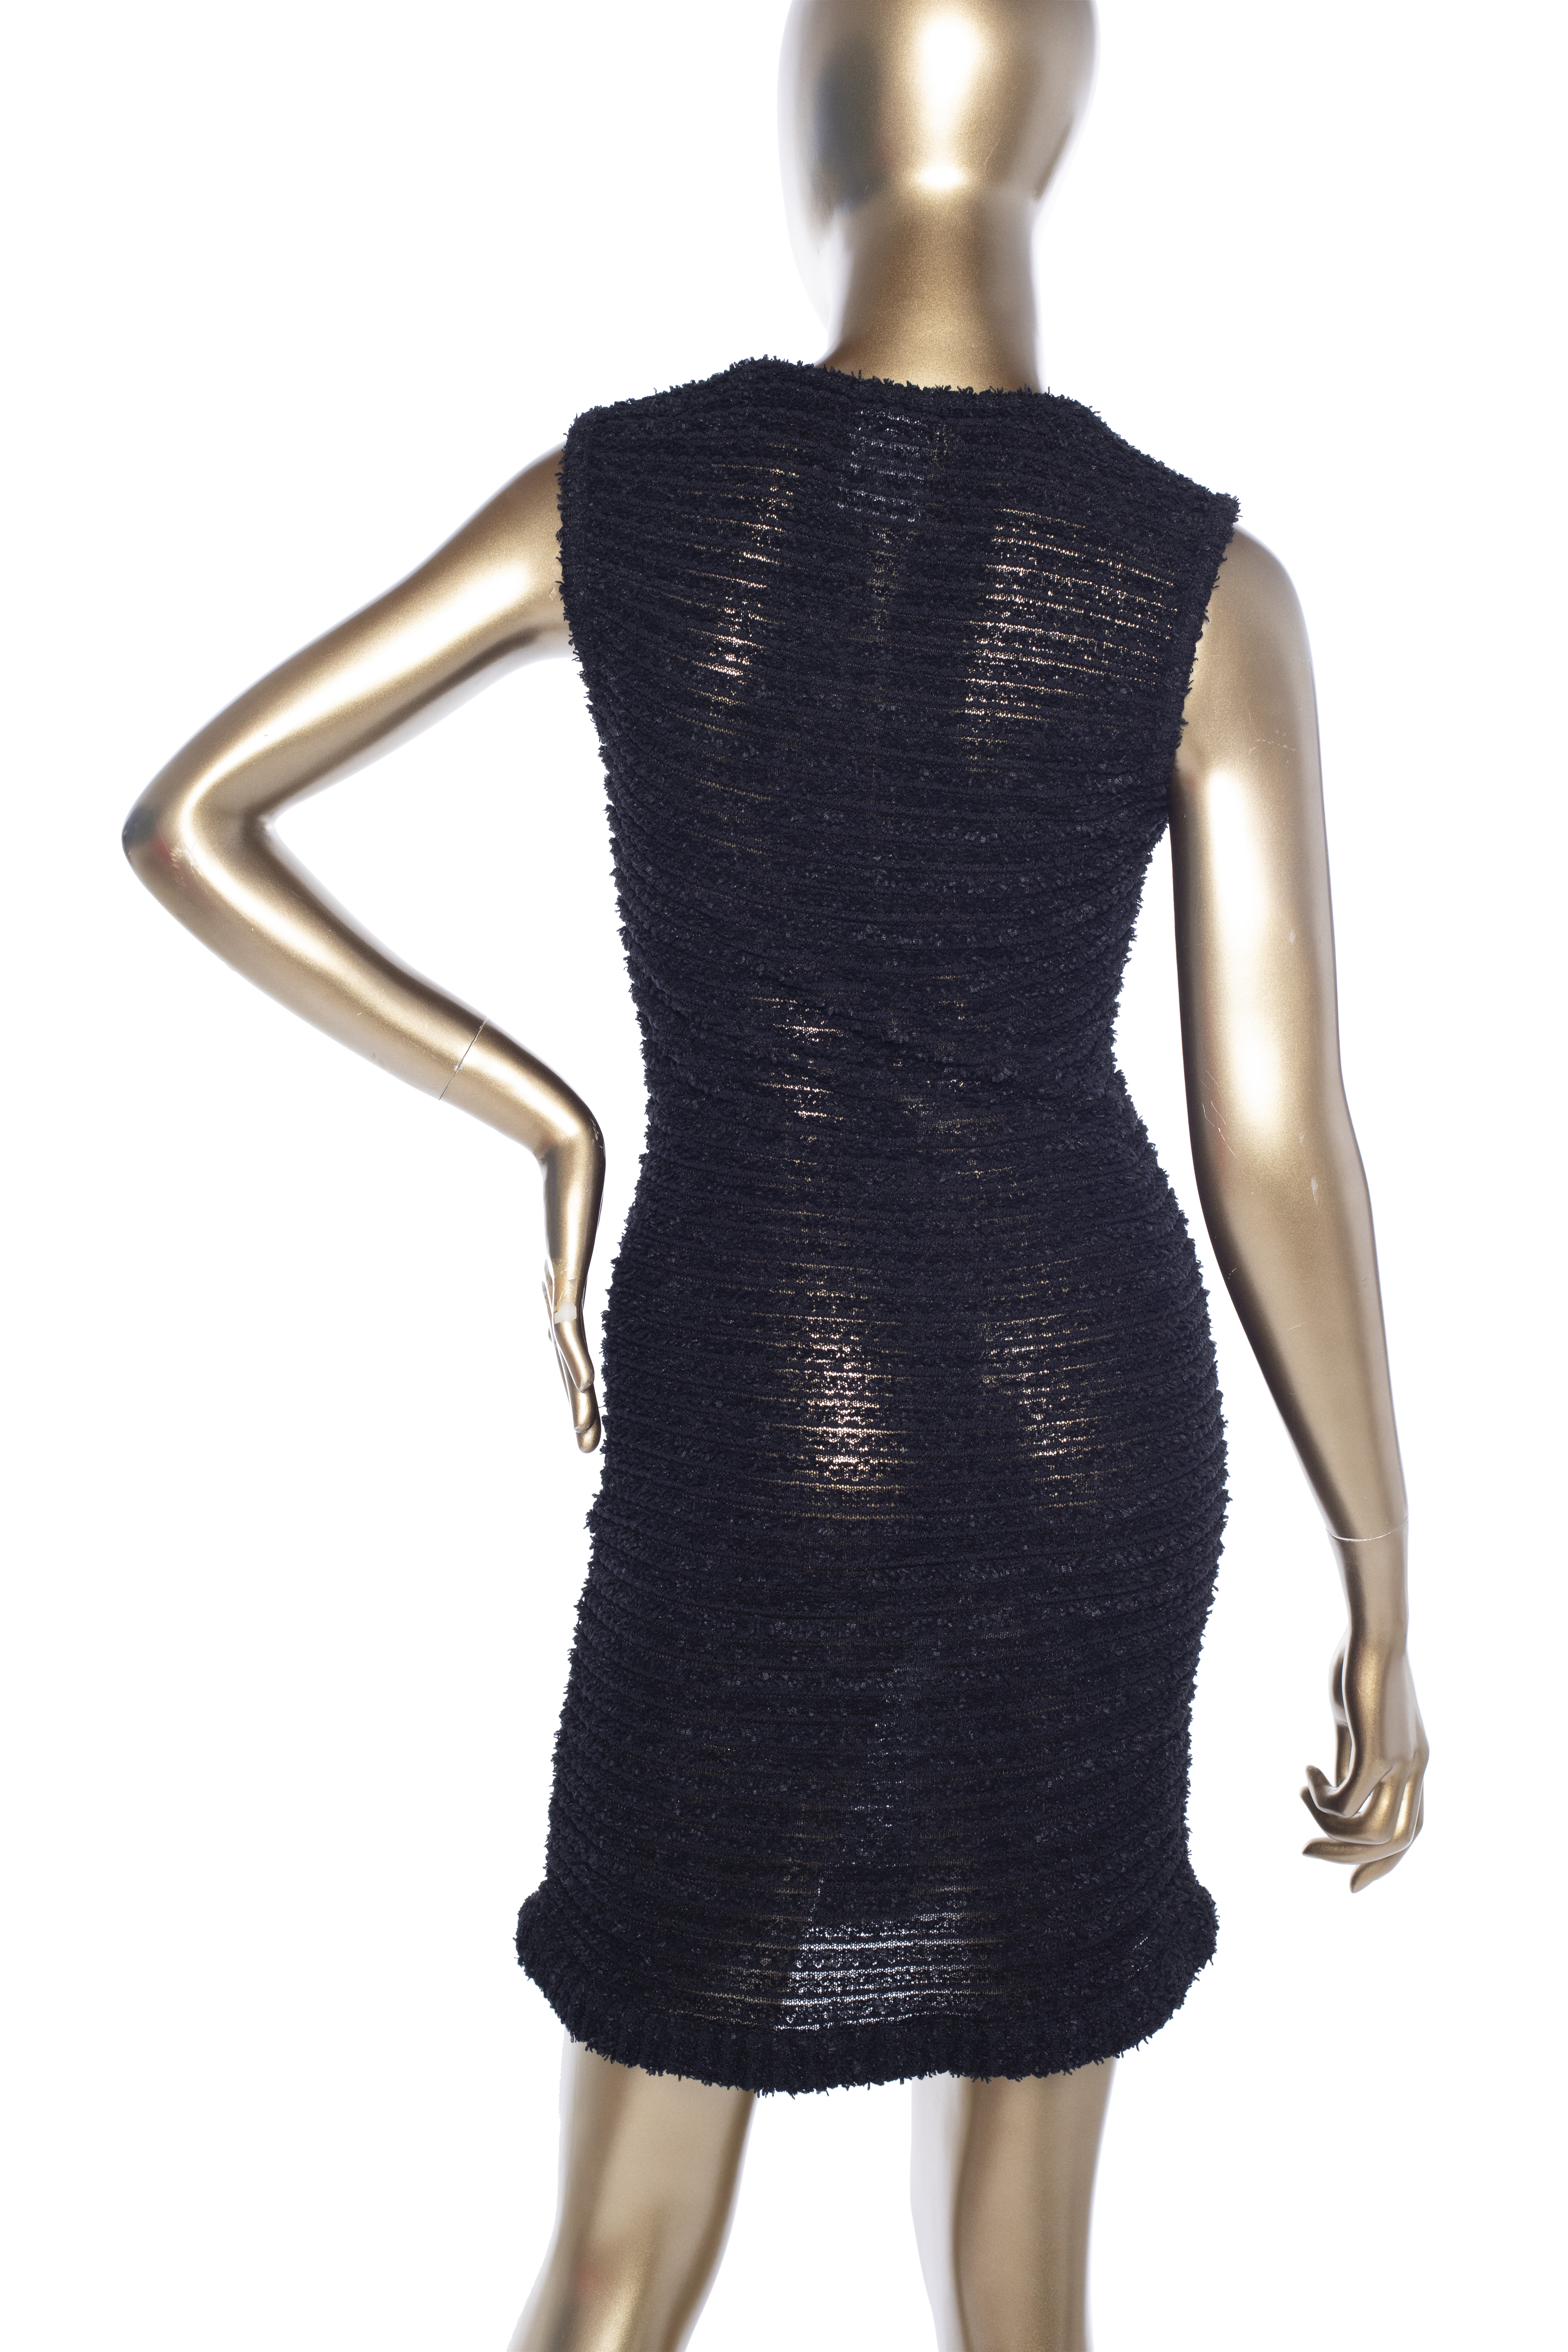 Chanel Knit Dress - Janet Mandell